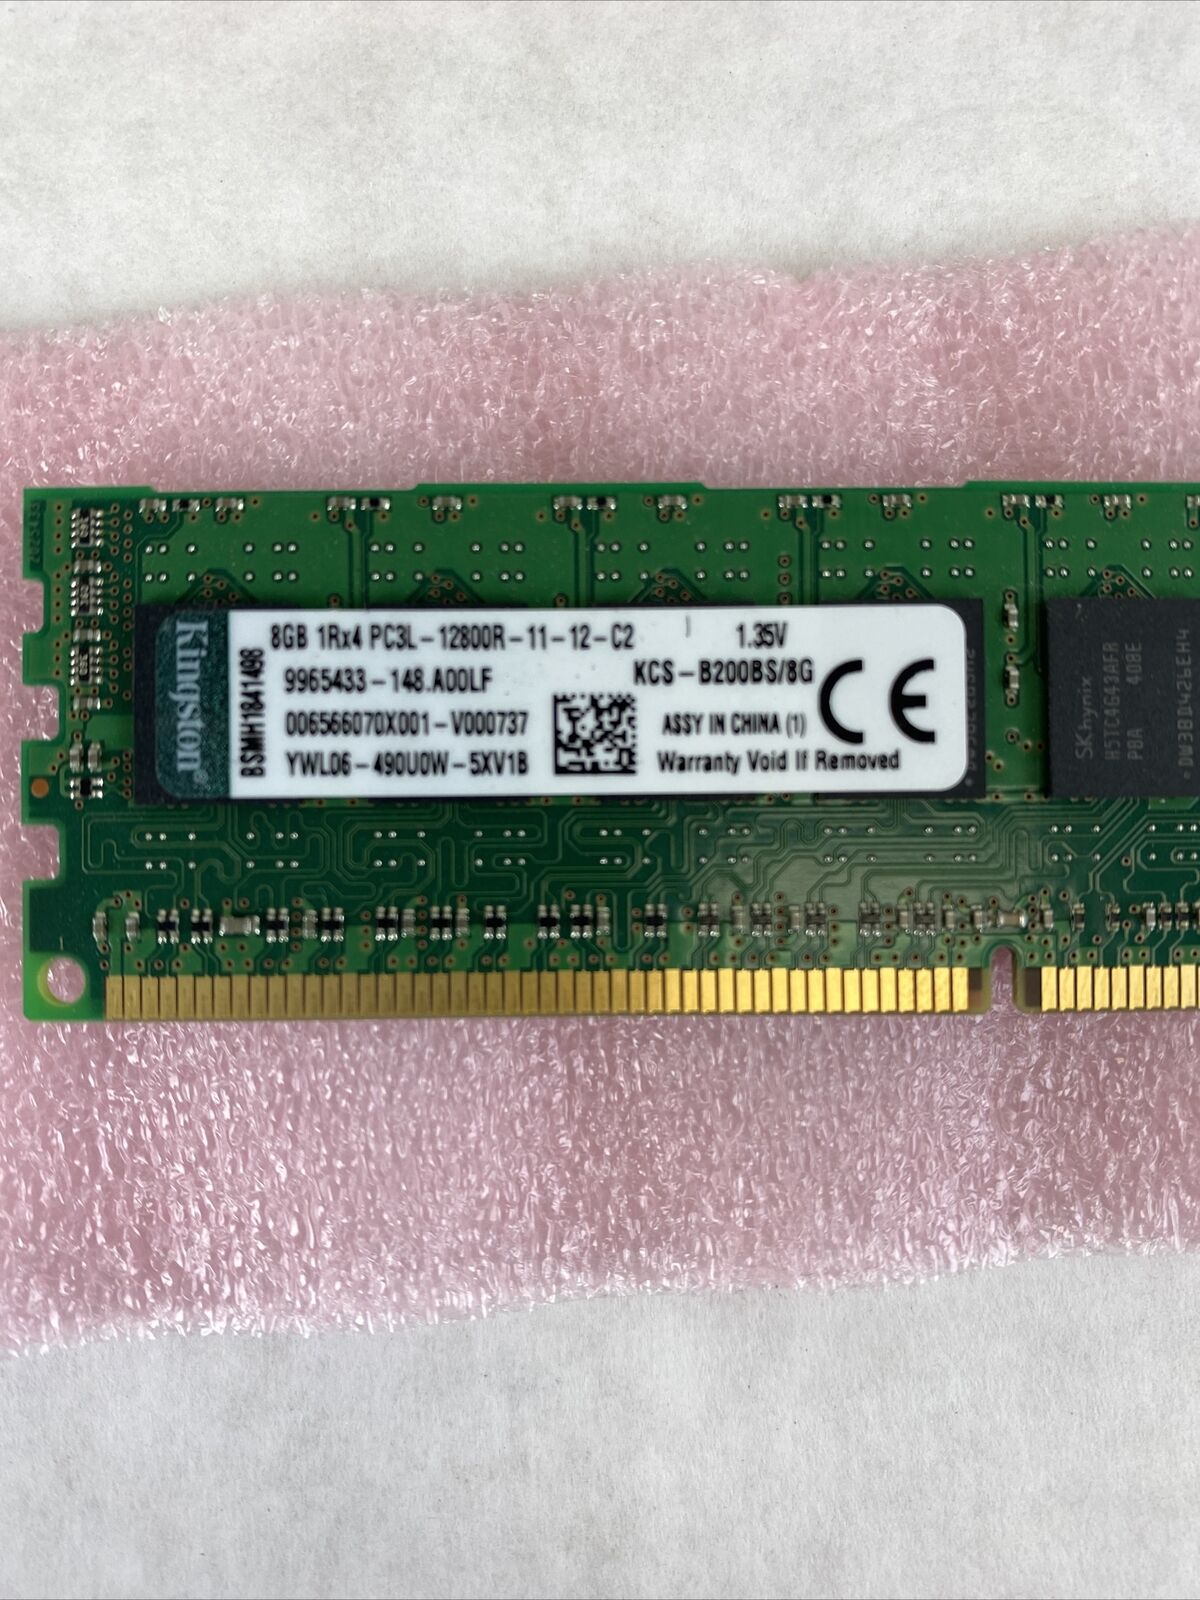 Kingston 8GB 1RX4 PC3L-12800R KCS-B200BS/8G BSMH1841498 Server Memory Lot of 2